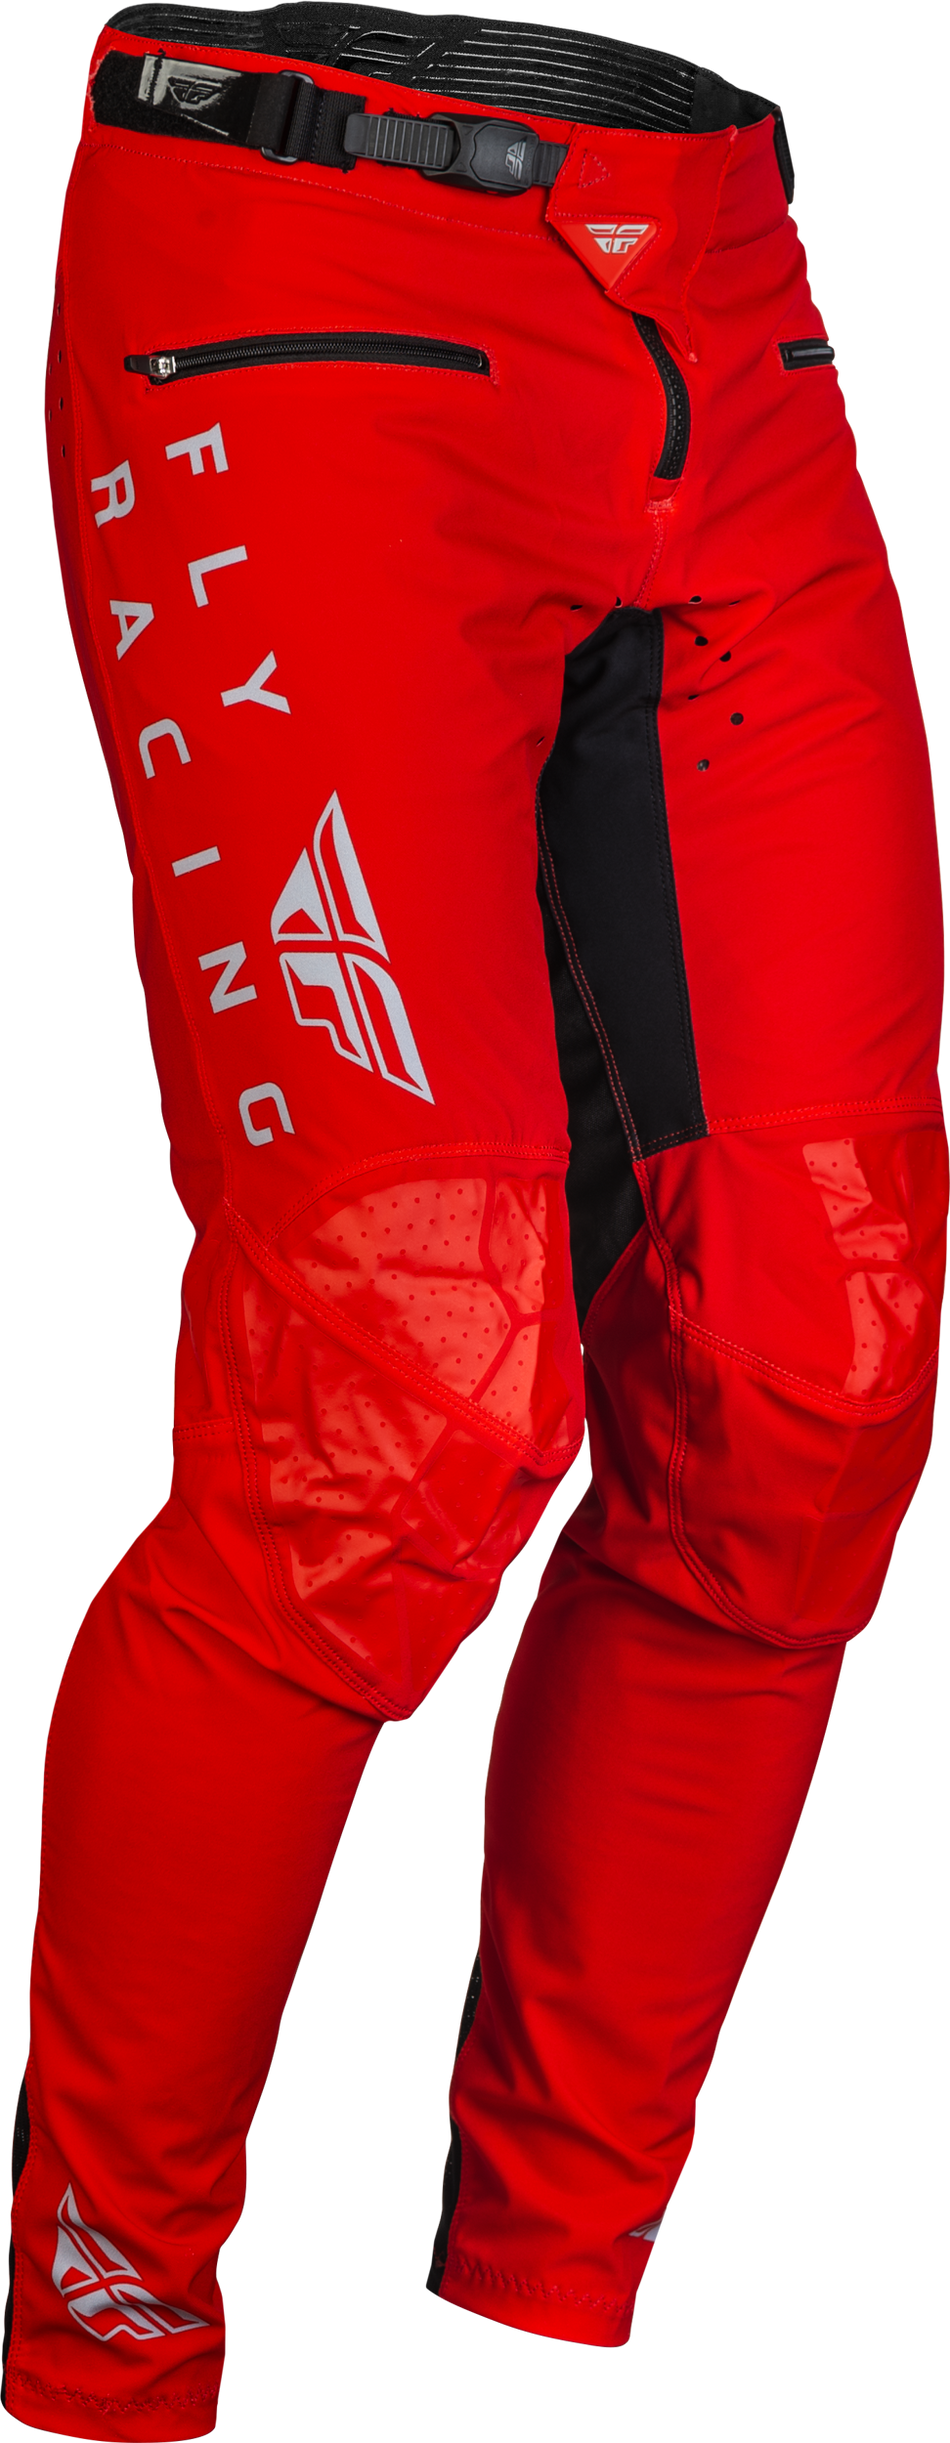 FLY RACING Radium Bicycle Pants Red/Black/Grey Sz 32 376-04332